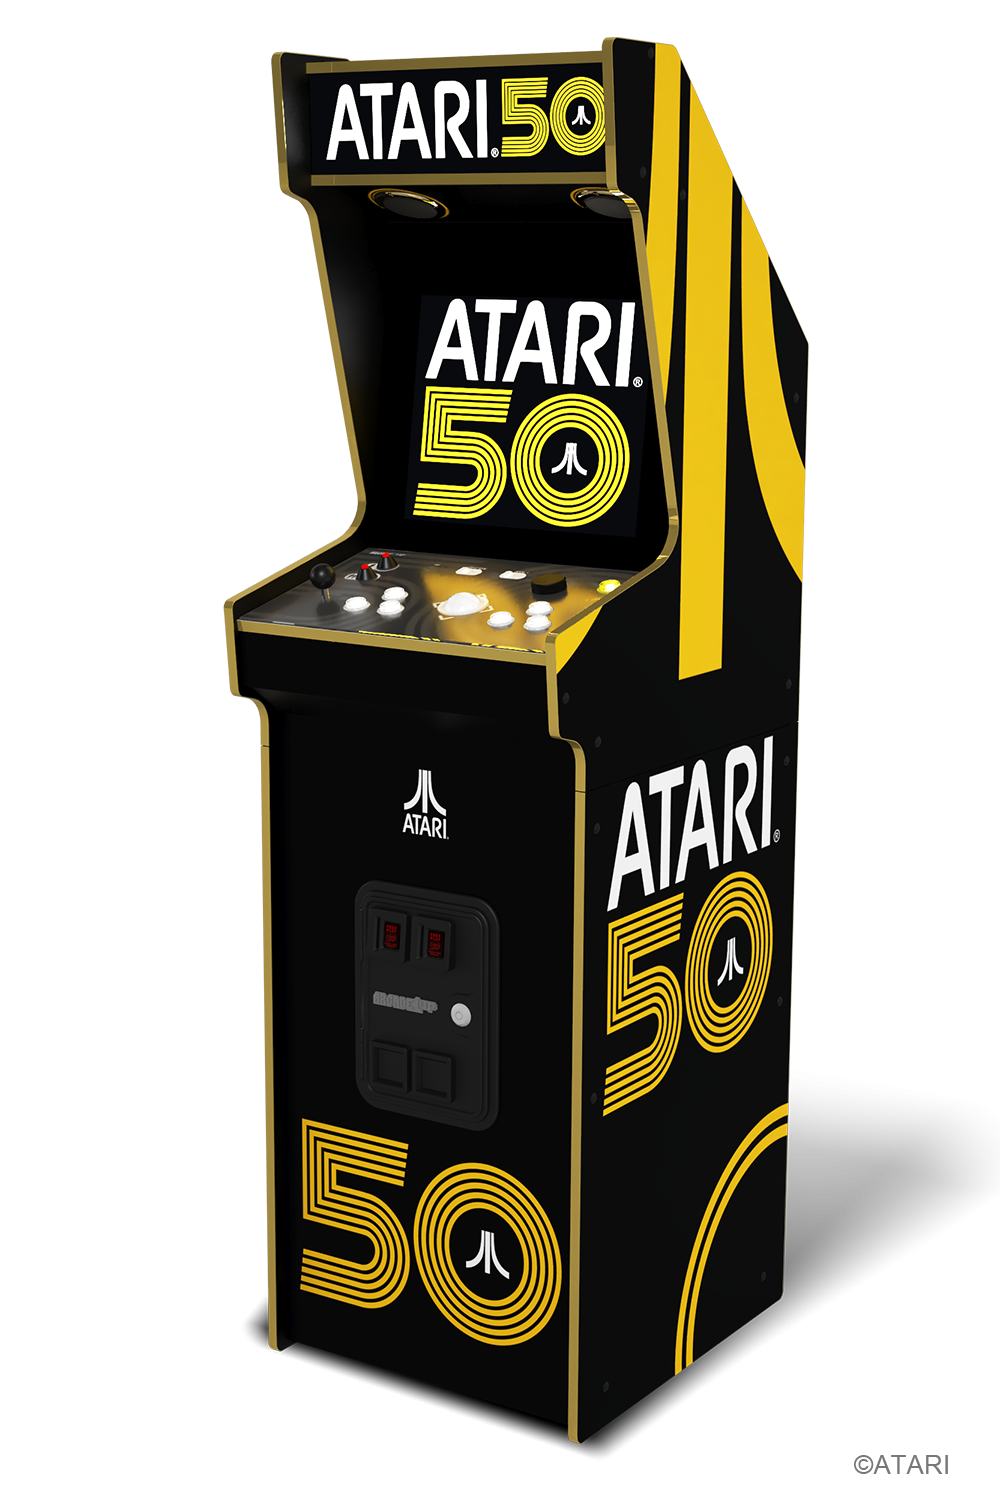 ARCADE 1 UP ATARI 50TH ANNIVESARY DELUXE ARCADE MACHINE - 50 GAMES IN 1